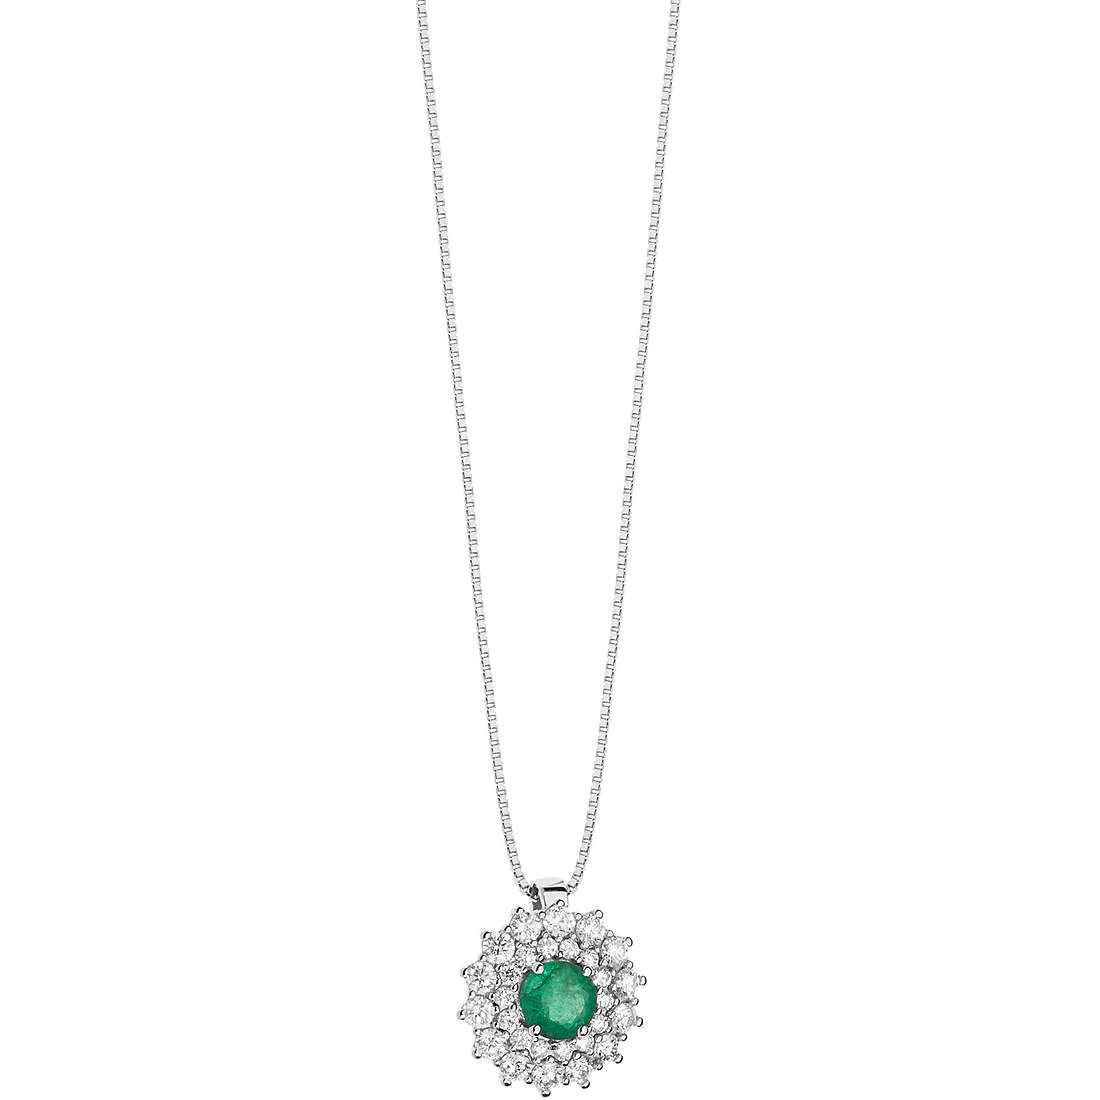 orion GLB 1475 Women’s Jewelry Necklace